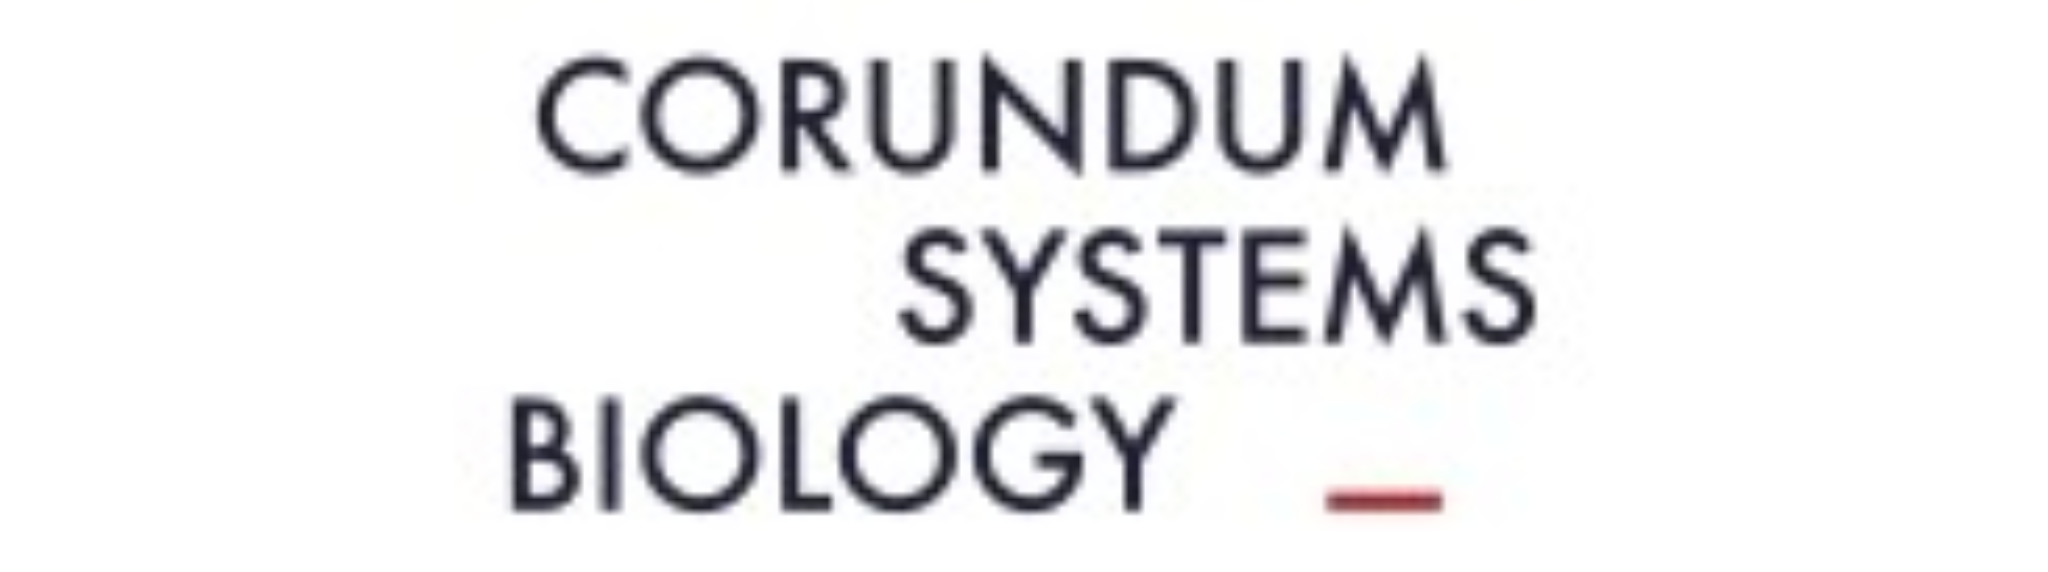 Corundum Systems Biology